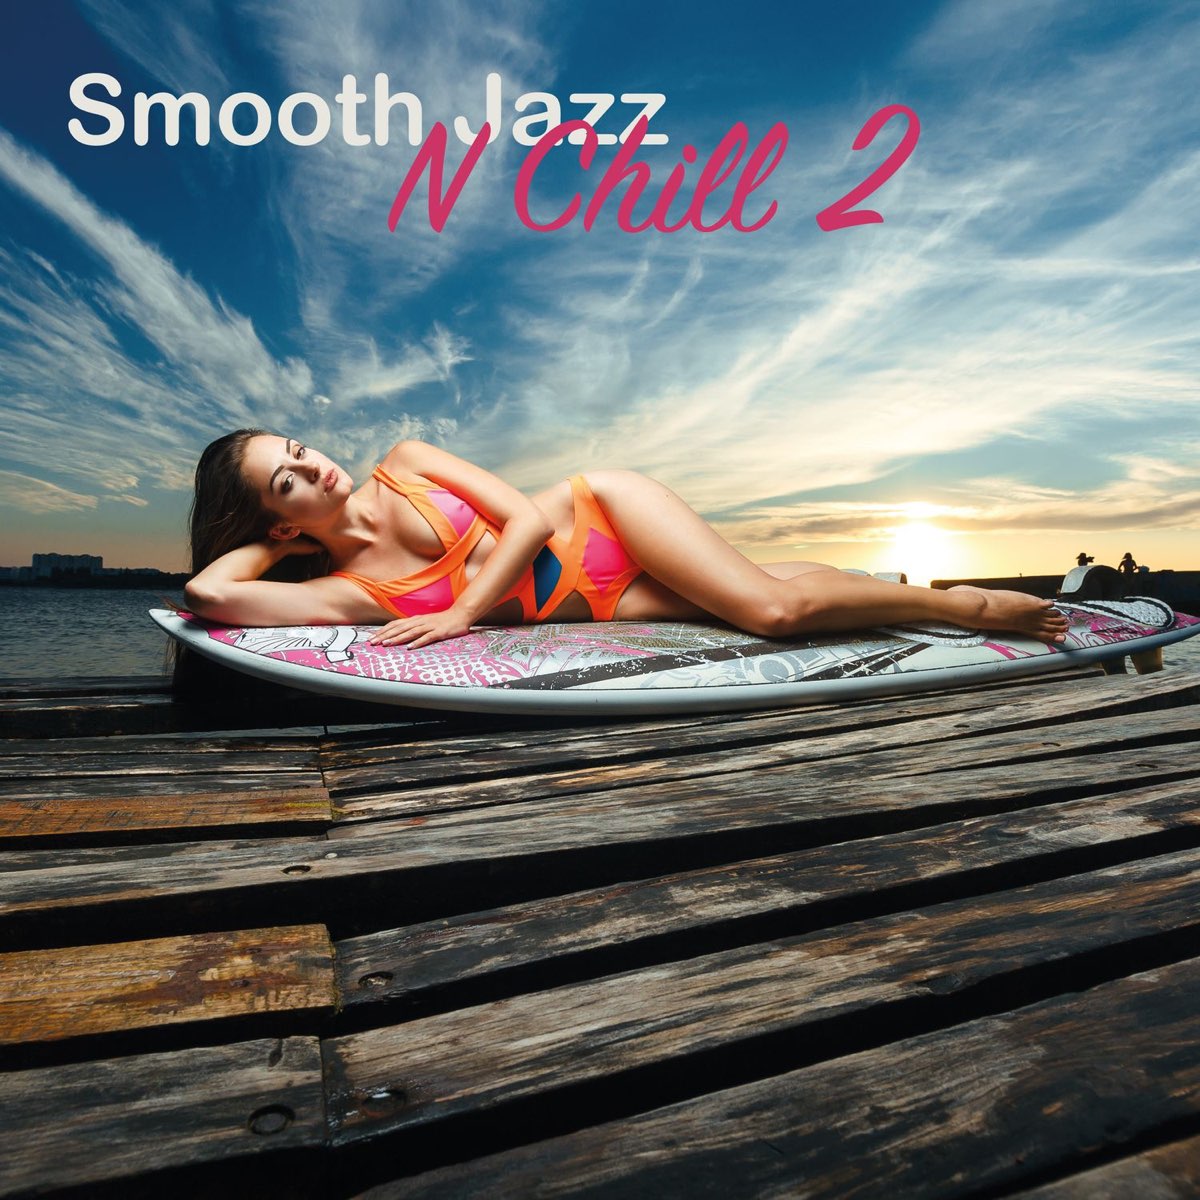 Smooth Jazz n Chill. "Smooth Jazz" && ( исполнитель | группа | музыка | Music | Band | artist ) && (фото | photo). Va. Smooth Jazz 2005. Chill мм2. Плавно слушать